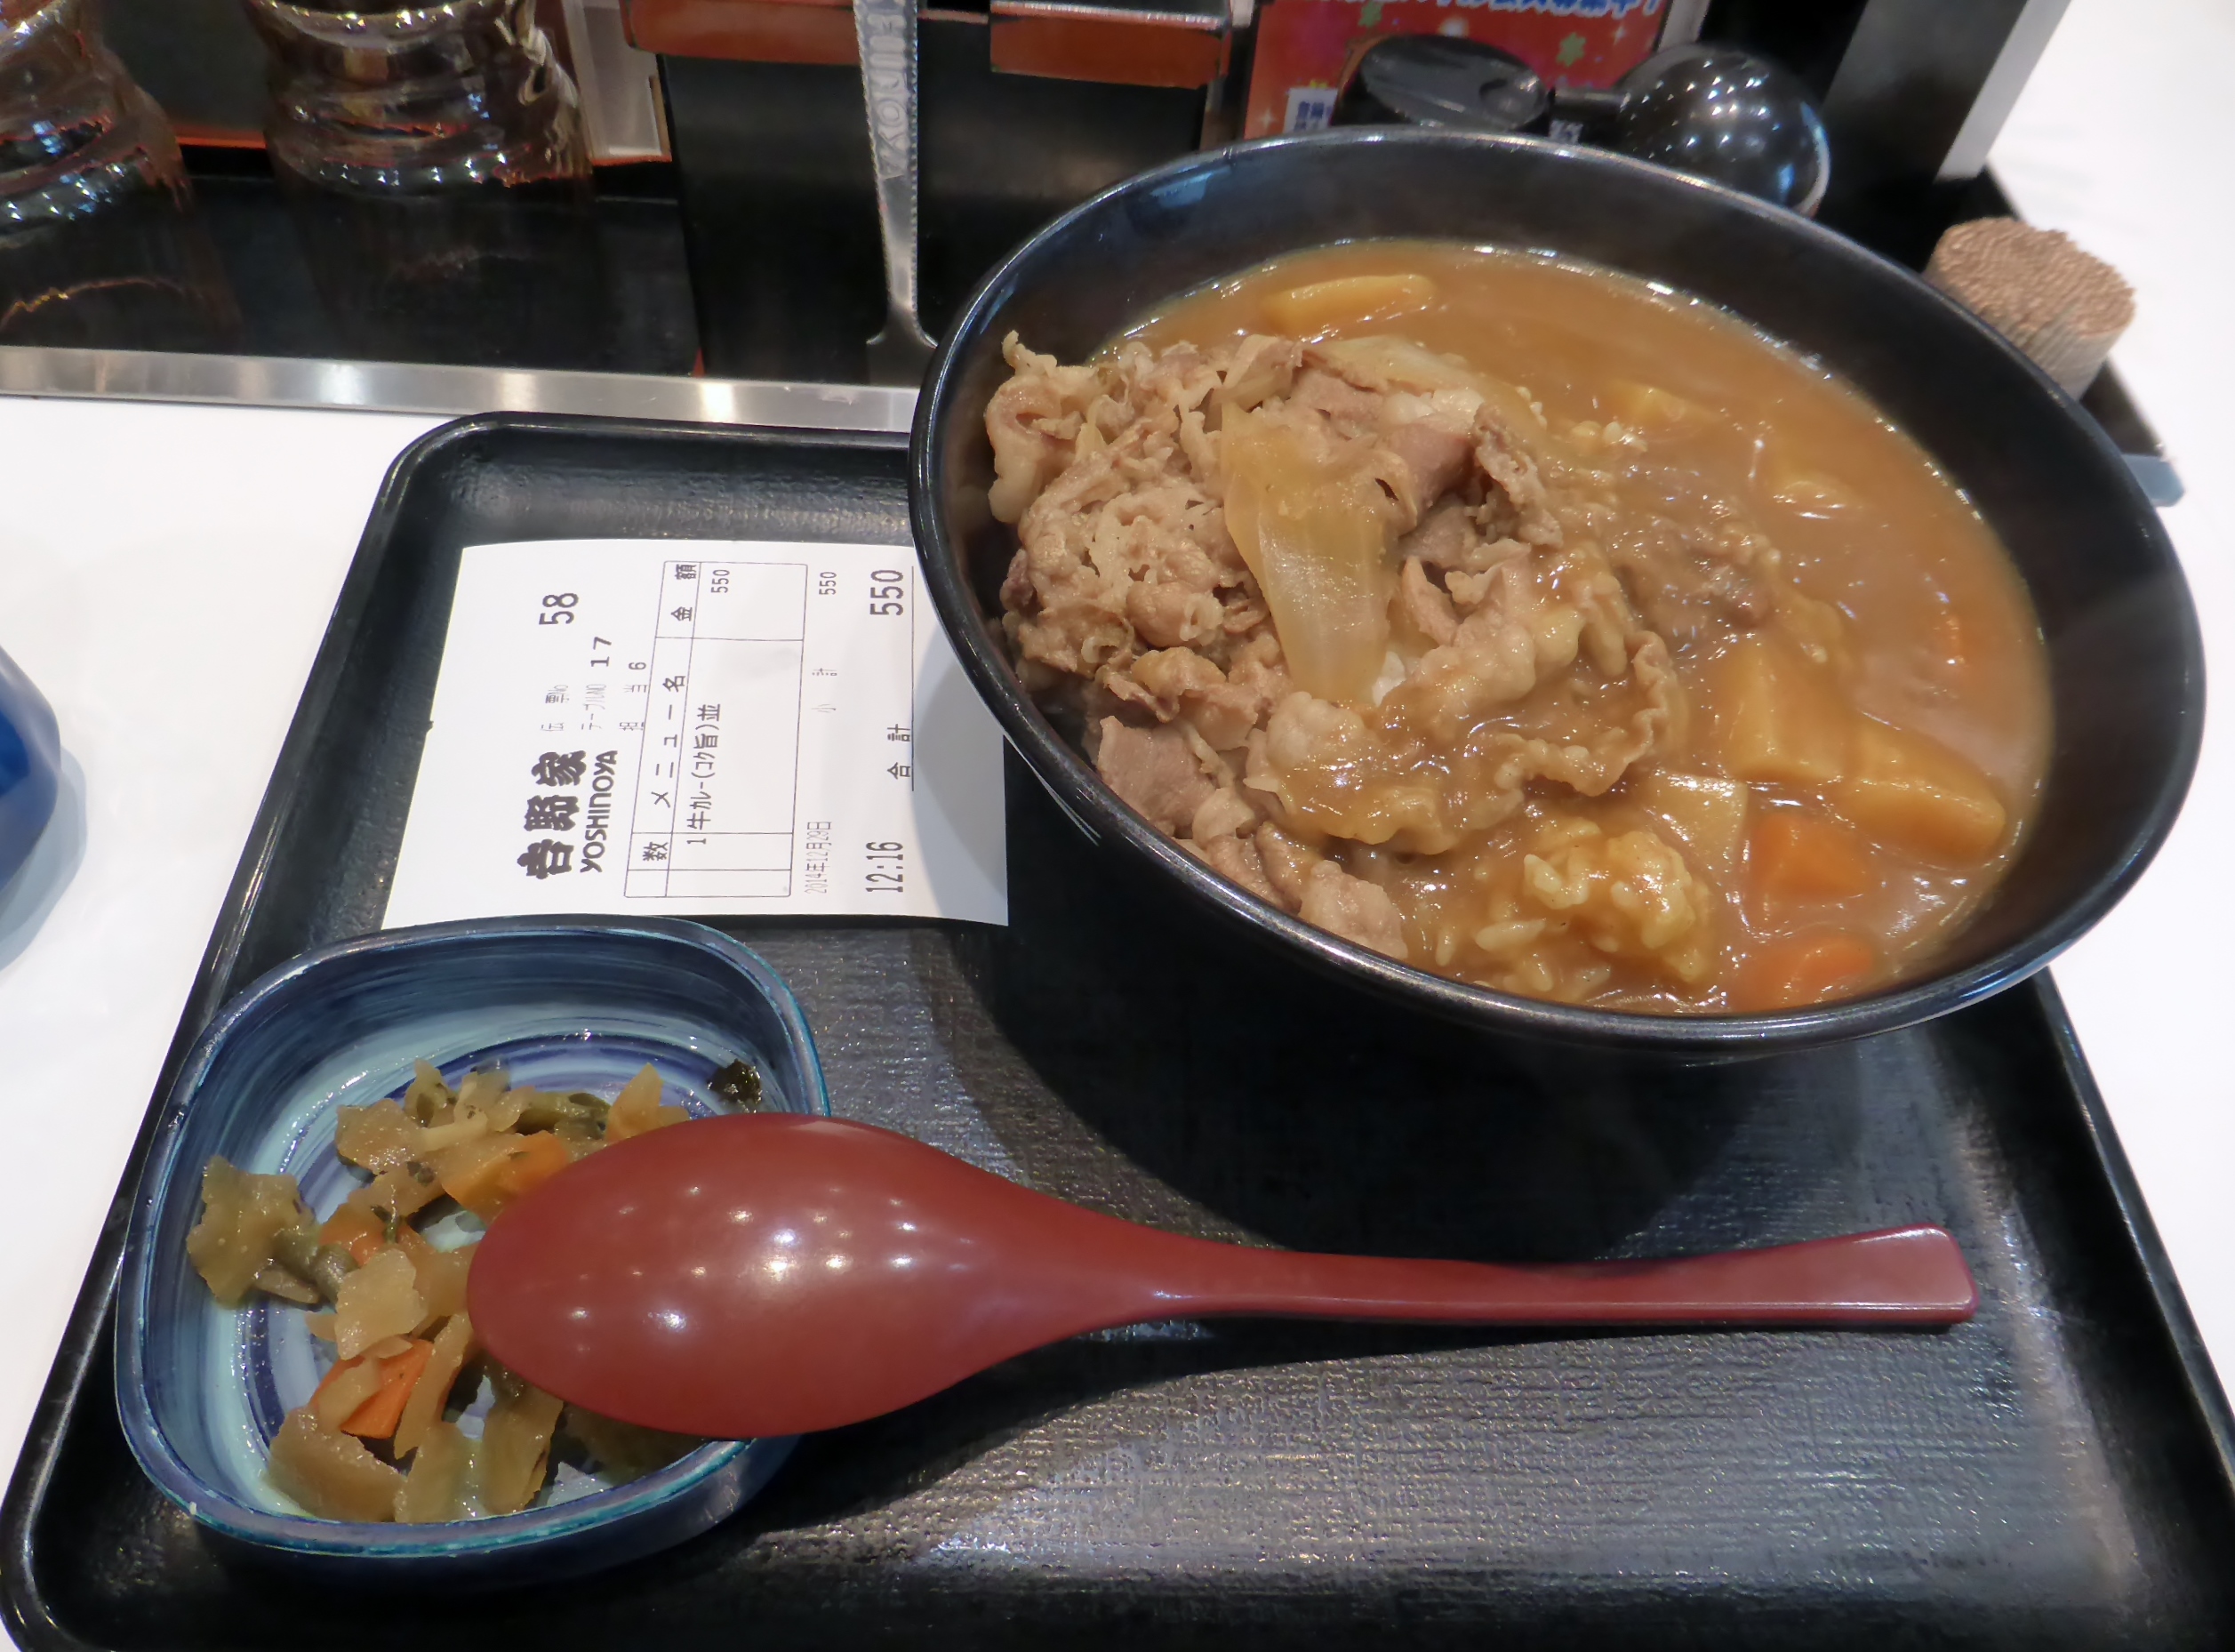 File:Beef curry rice 003.jpg - Wikipedia